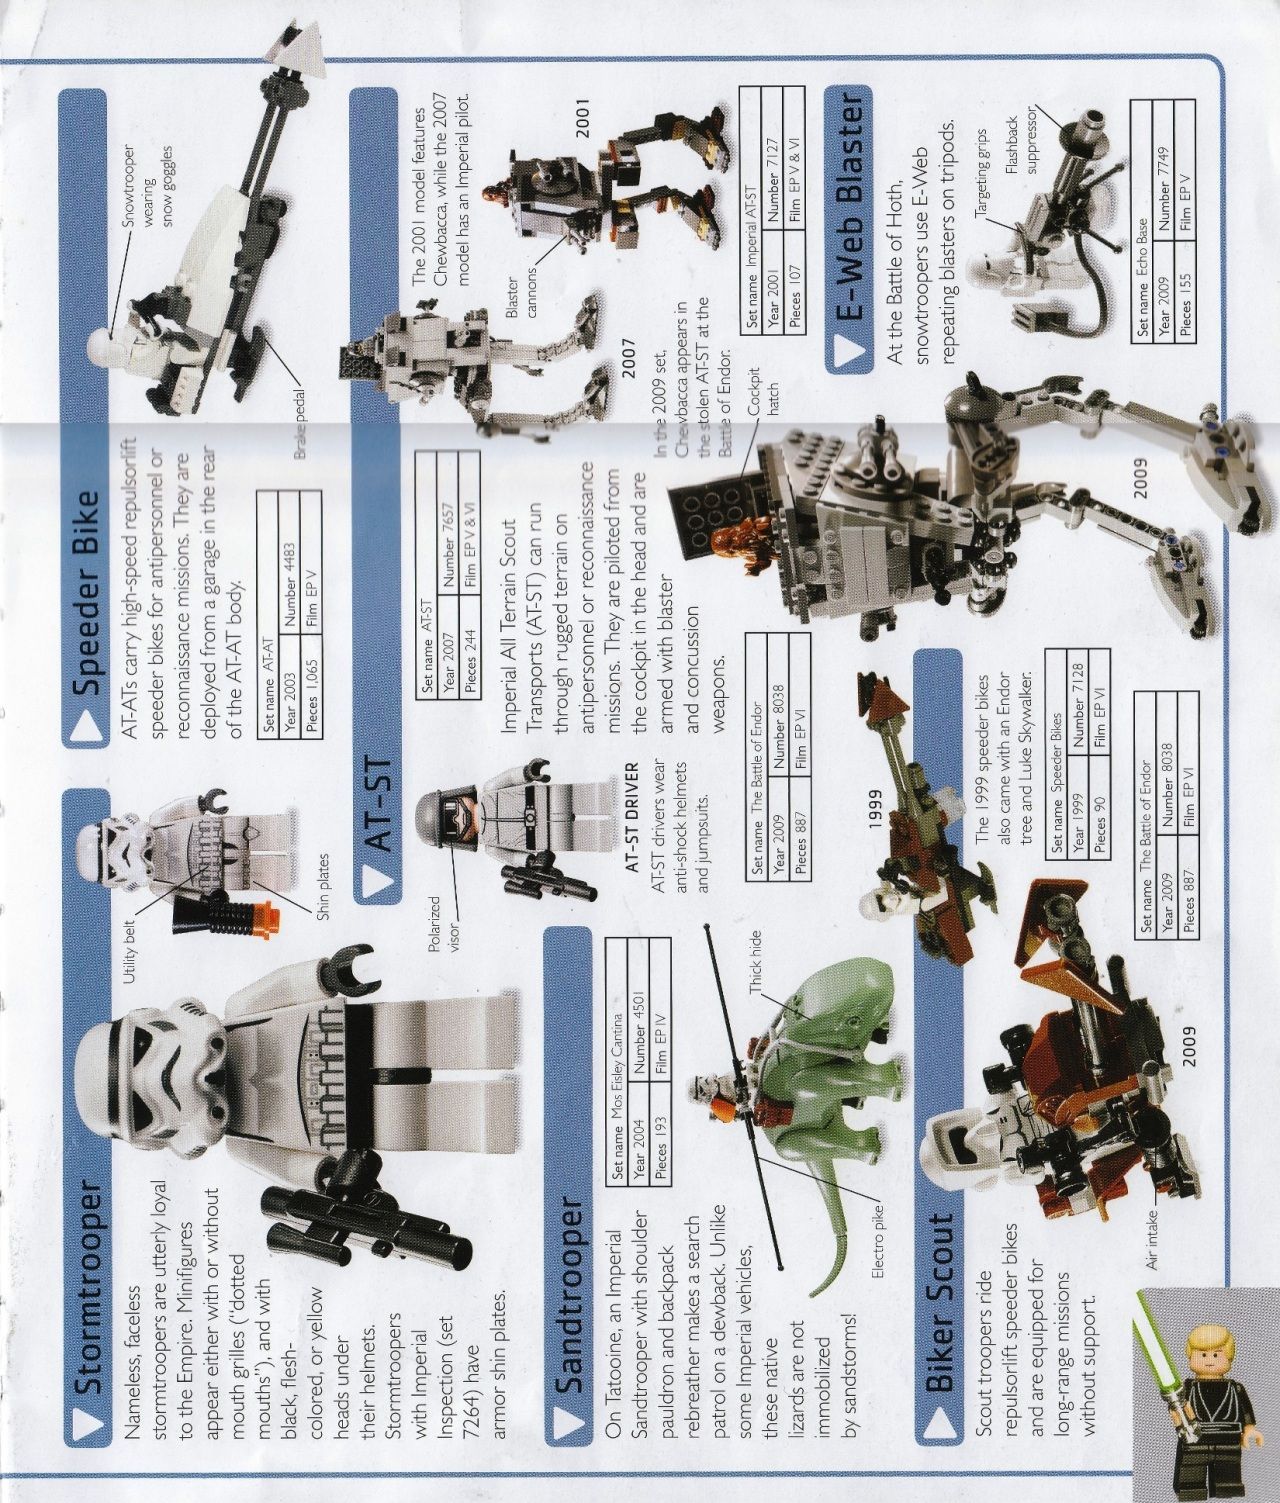 Lego Star Wars The Visual Dictionary 2009 Lego Star Wars The Visual Dictionary 2009 54